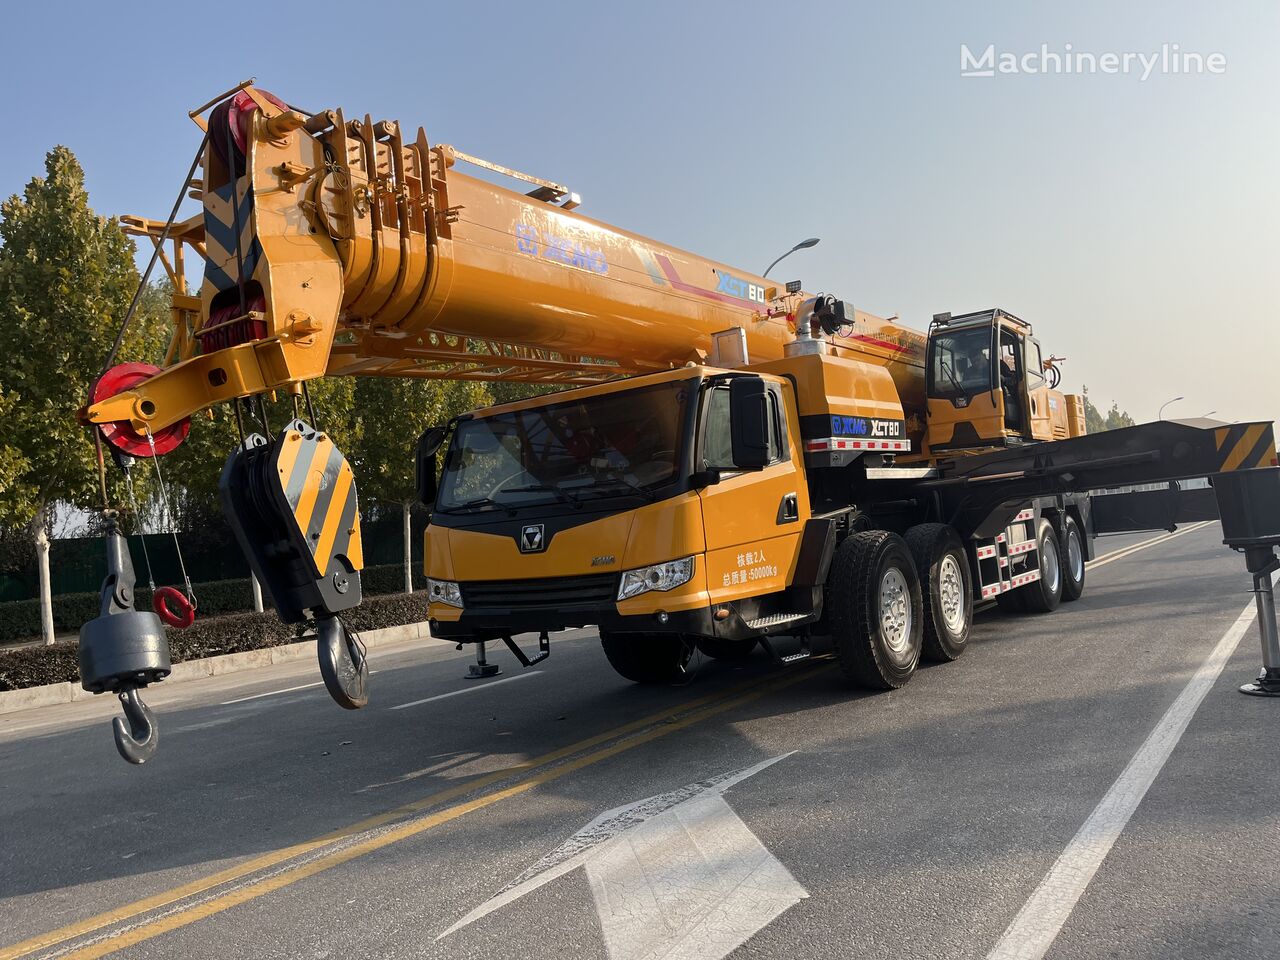 grue mobile XCMG XCMG XCT80 80 ton used hydraulic mounted mobile truck crane on s